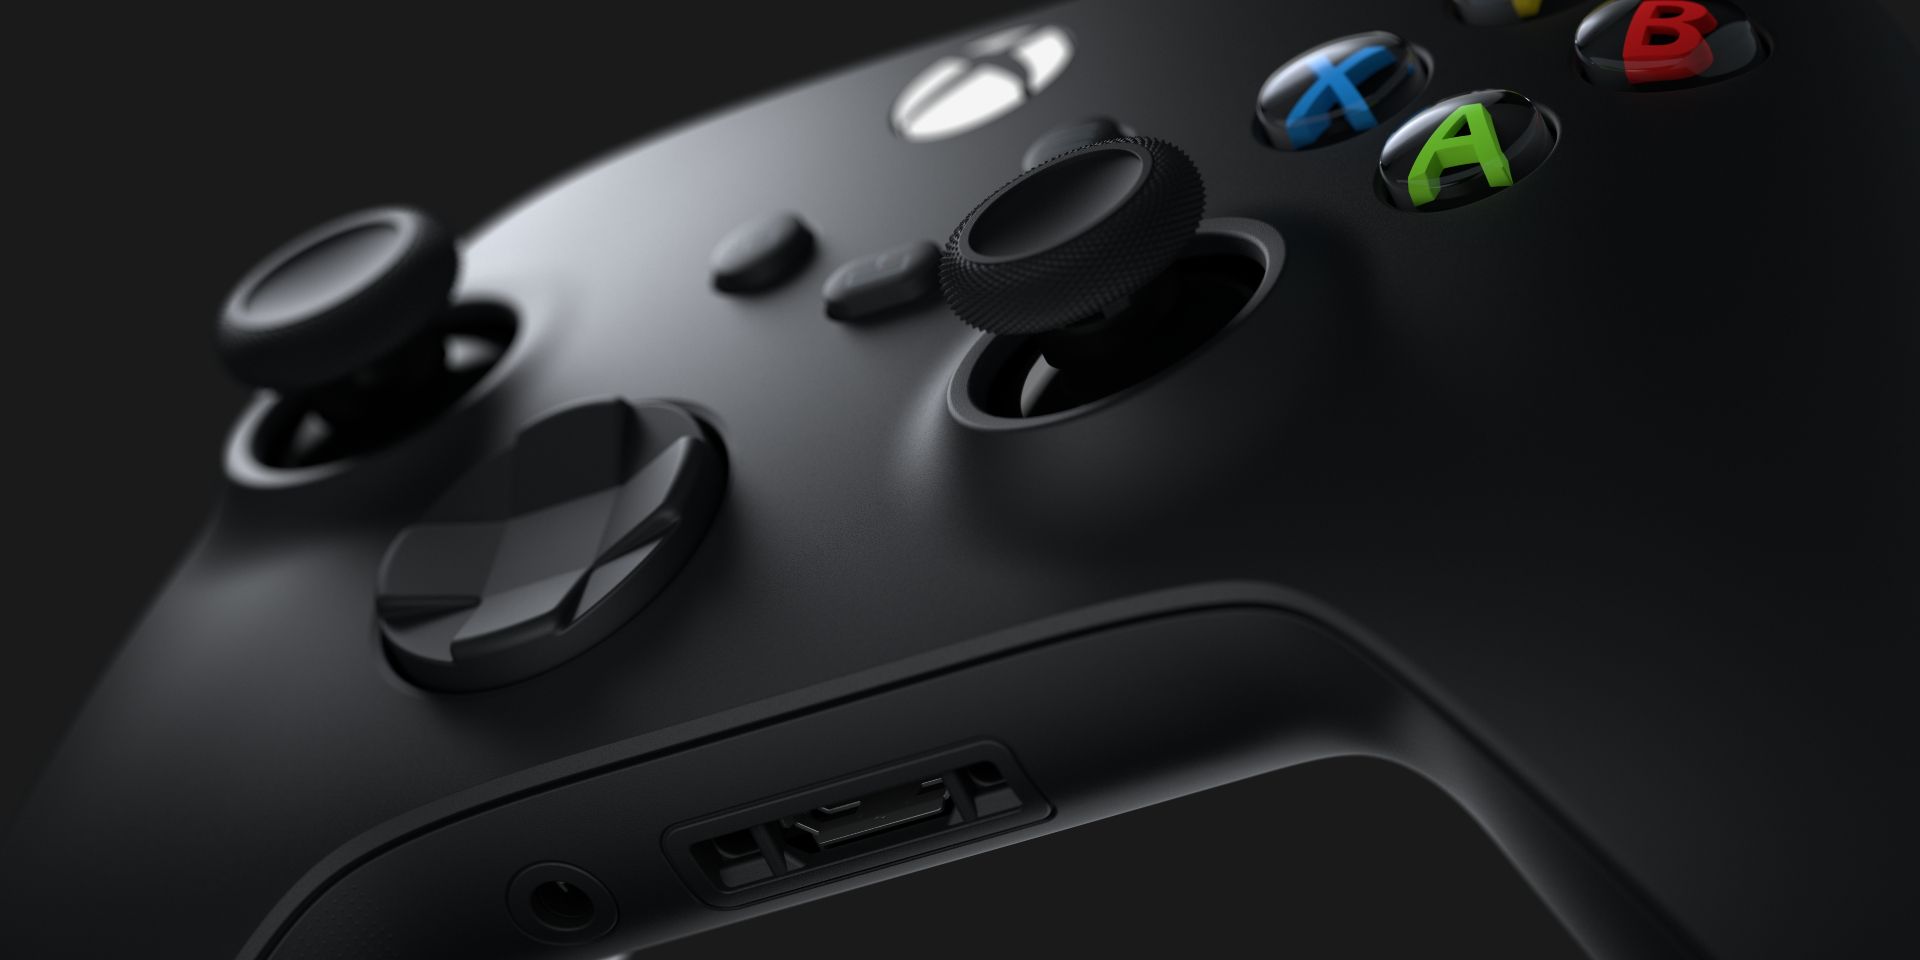 Close-up of an Xbox controller